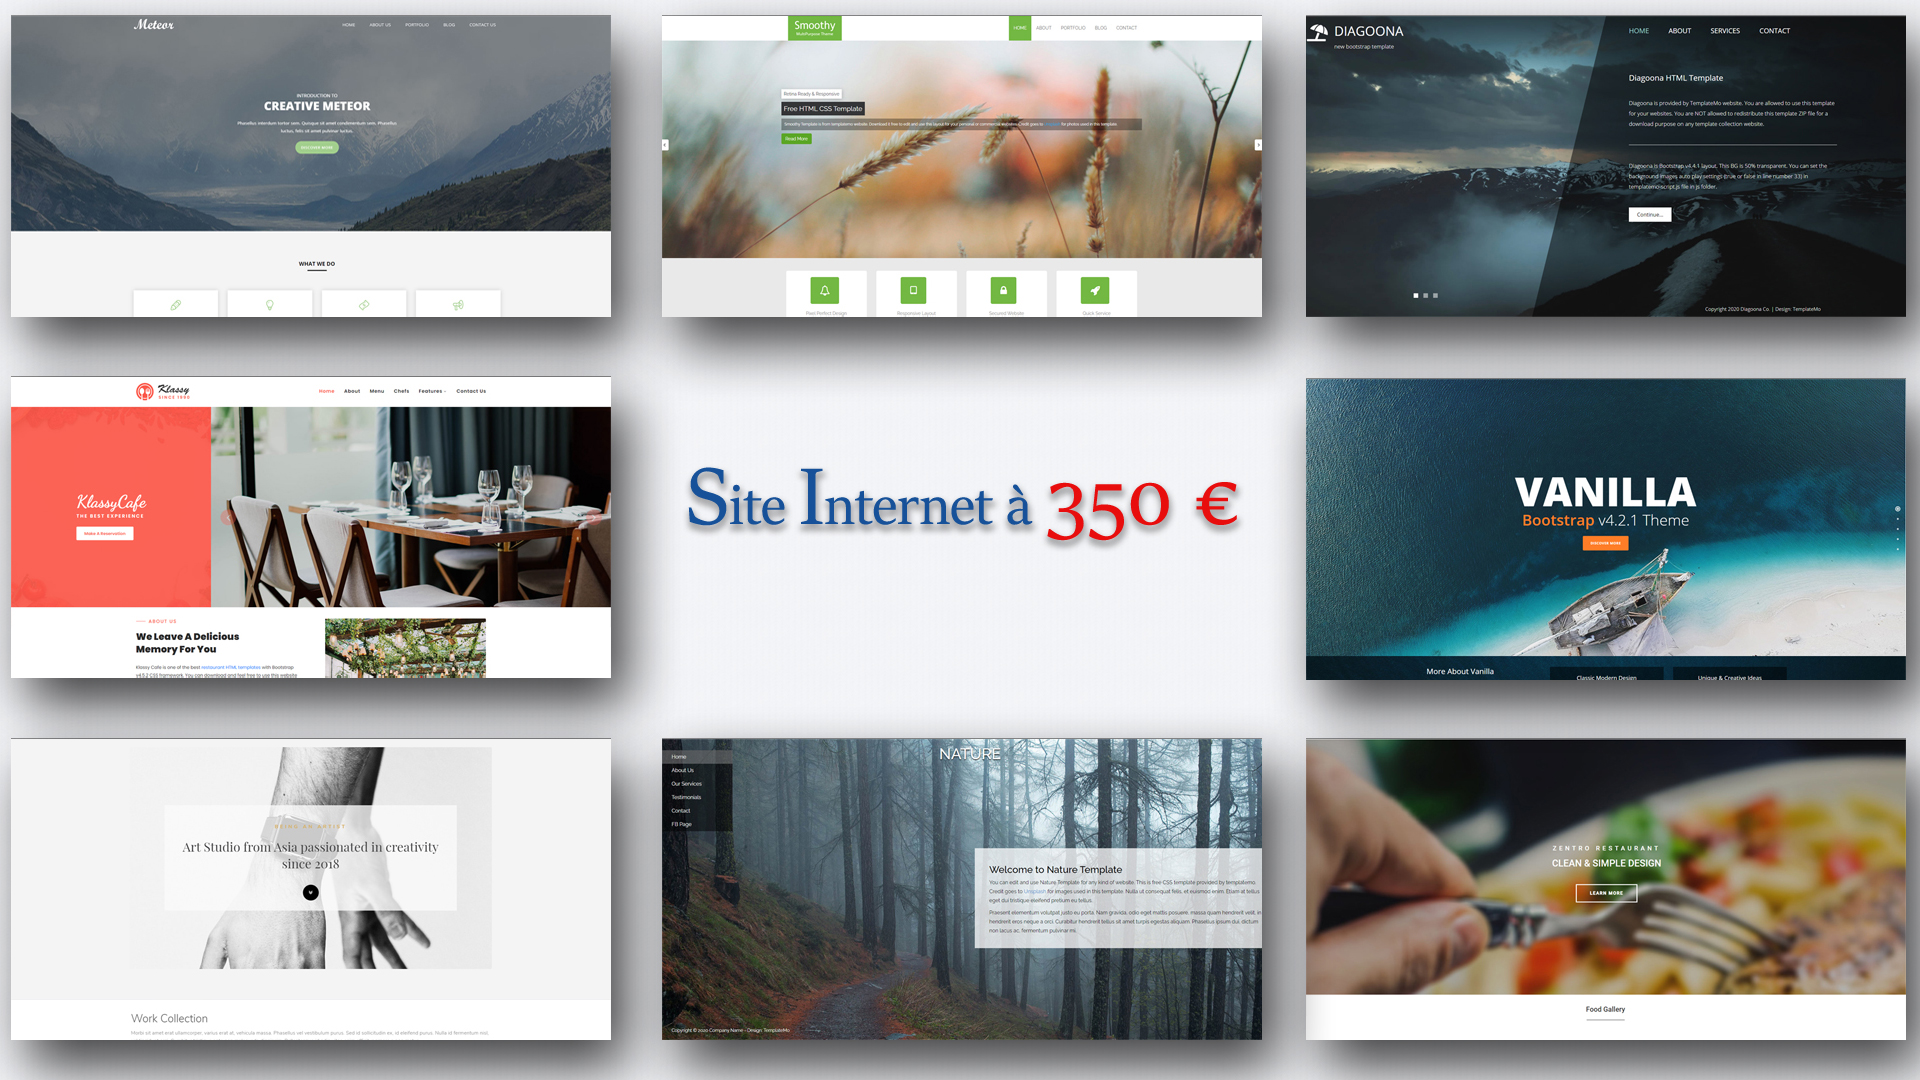 Site internet a 350 euro